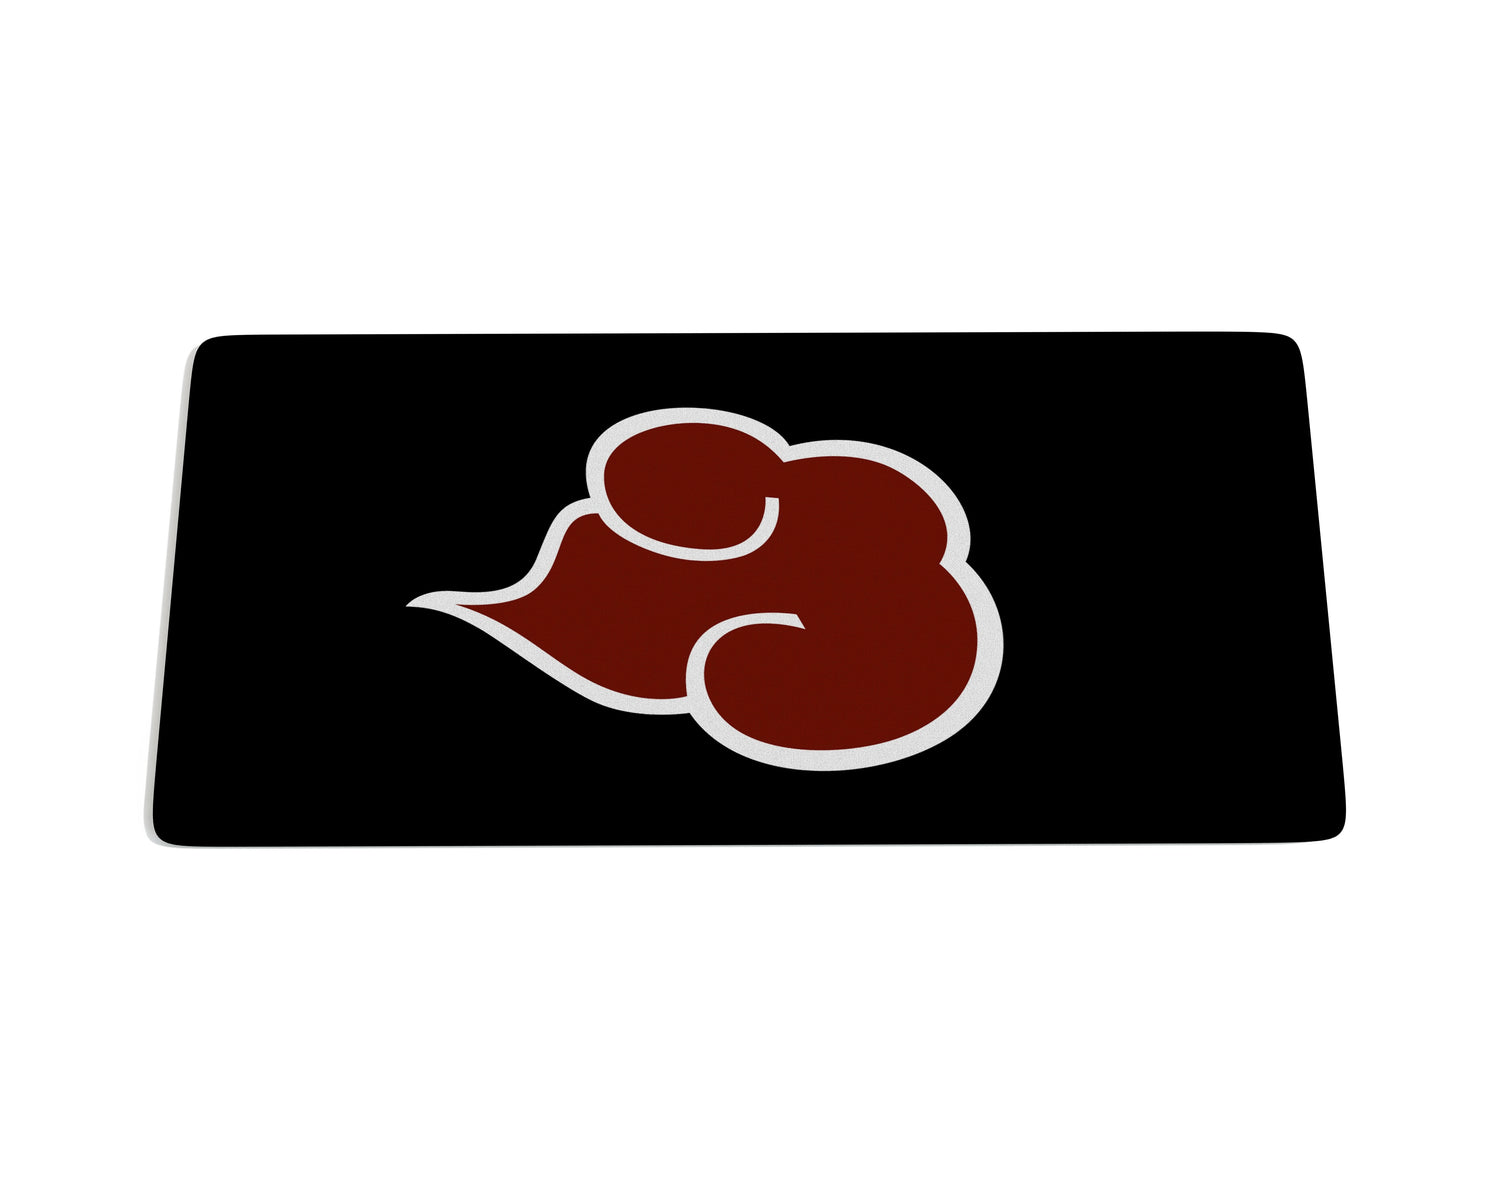 Naruto Mouse Pads - CustomMousePad.com.au | #1 Custom Mouse Pad Brand